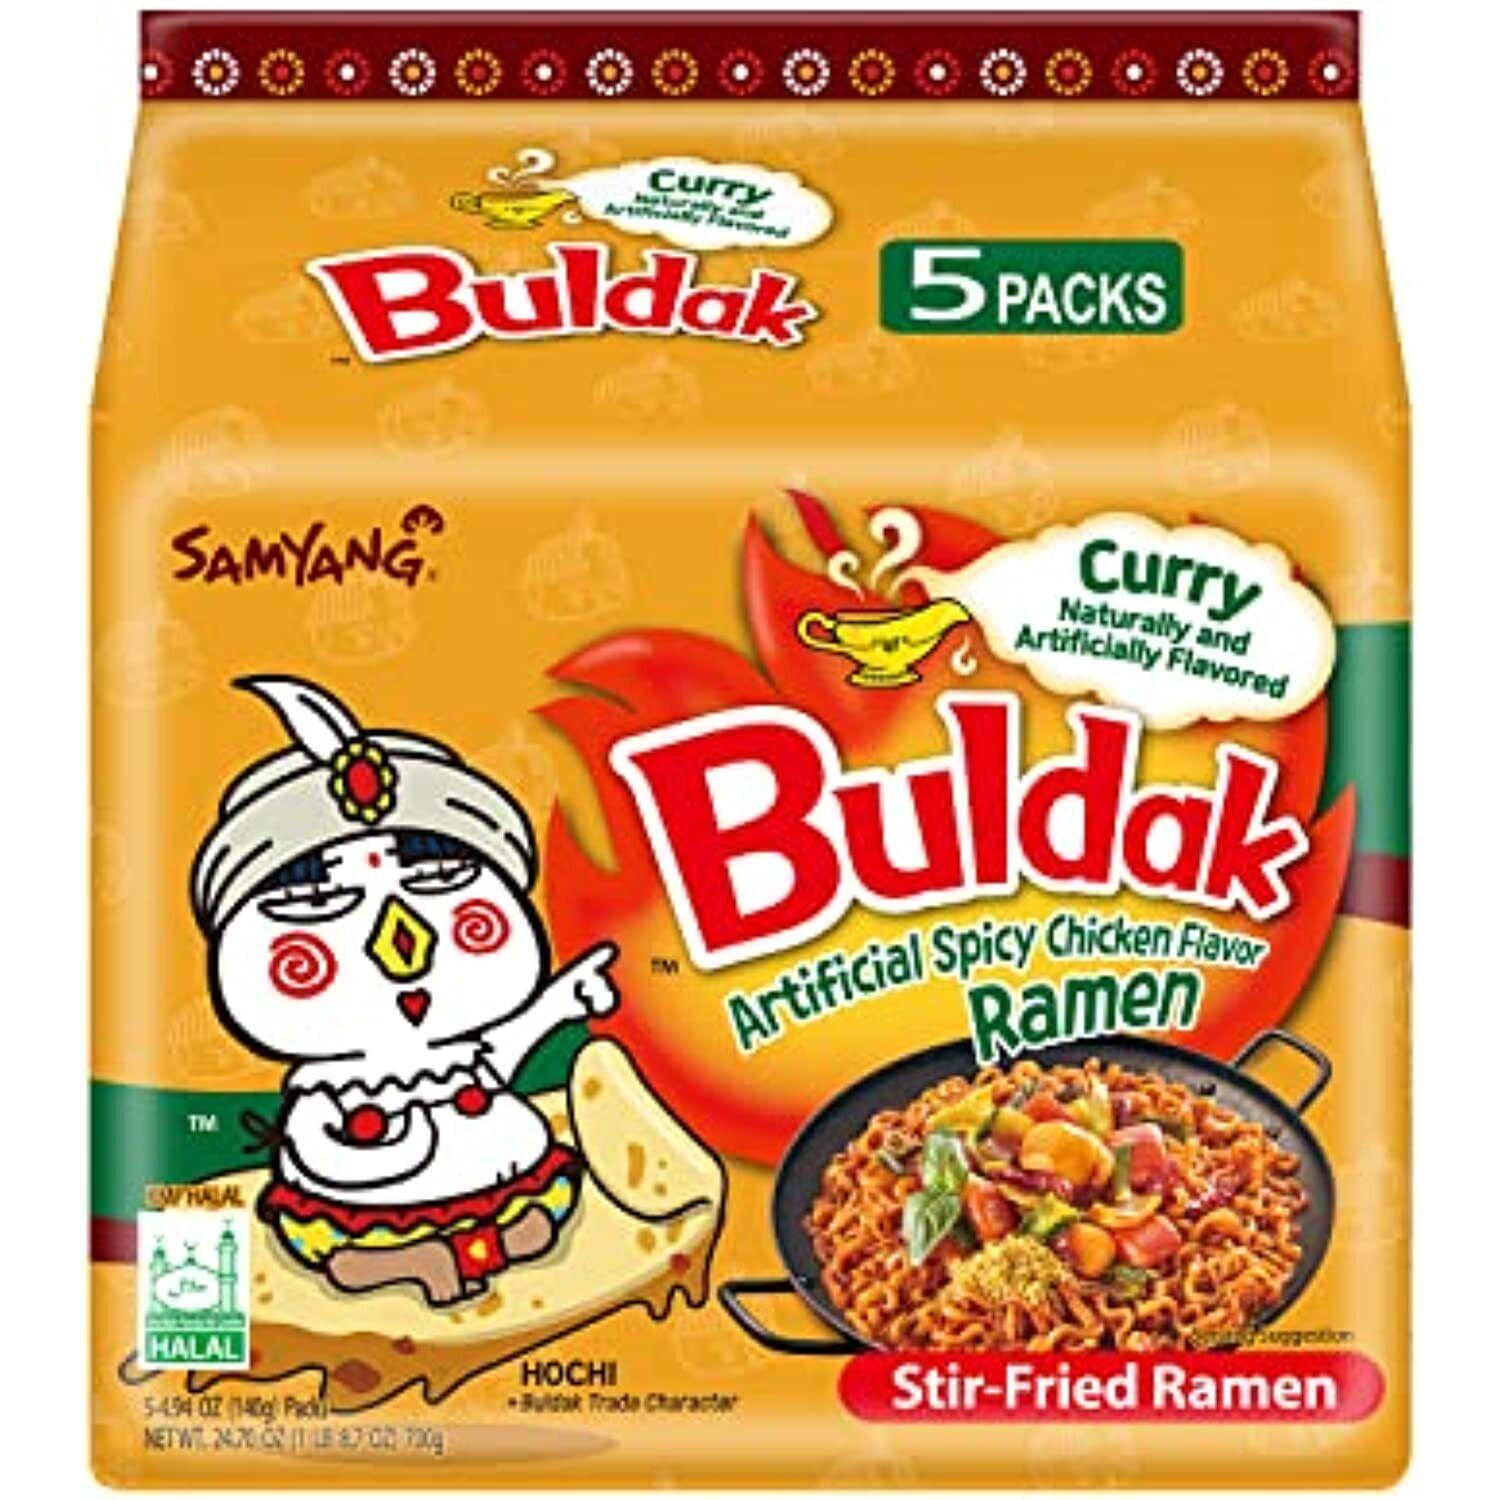 Samyang Jjajang Buldak Fire Fried Chicken Spicy Multi Curry Noodle Ramen 140g x5 (8 pack)